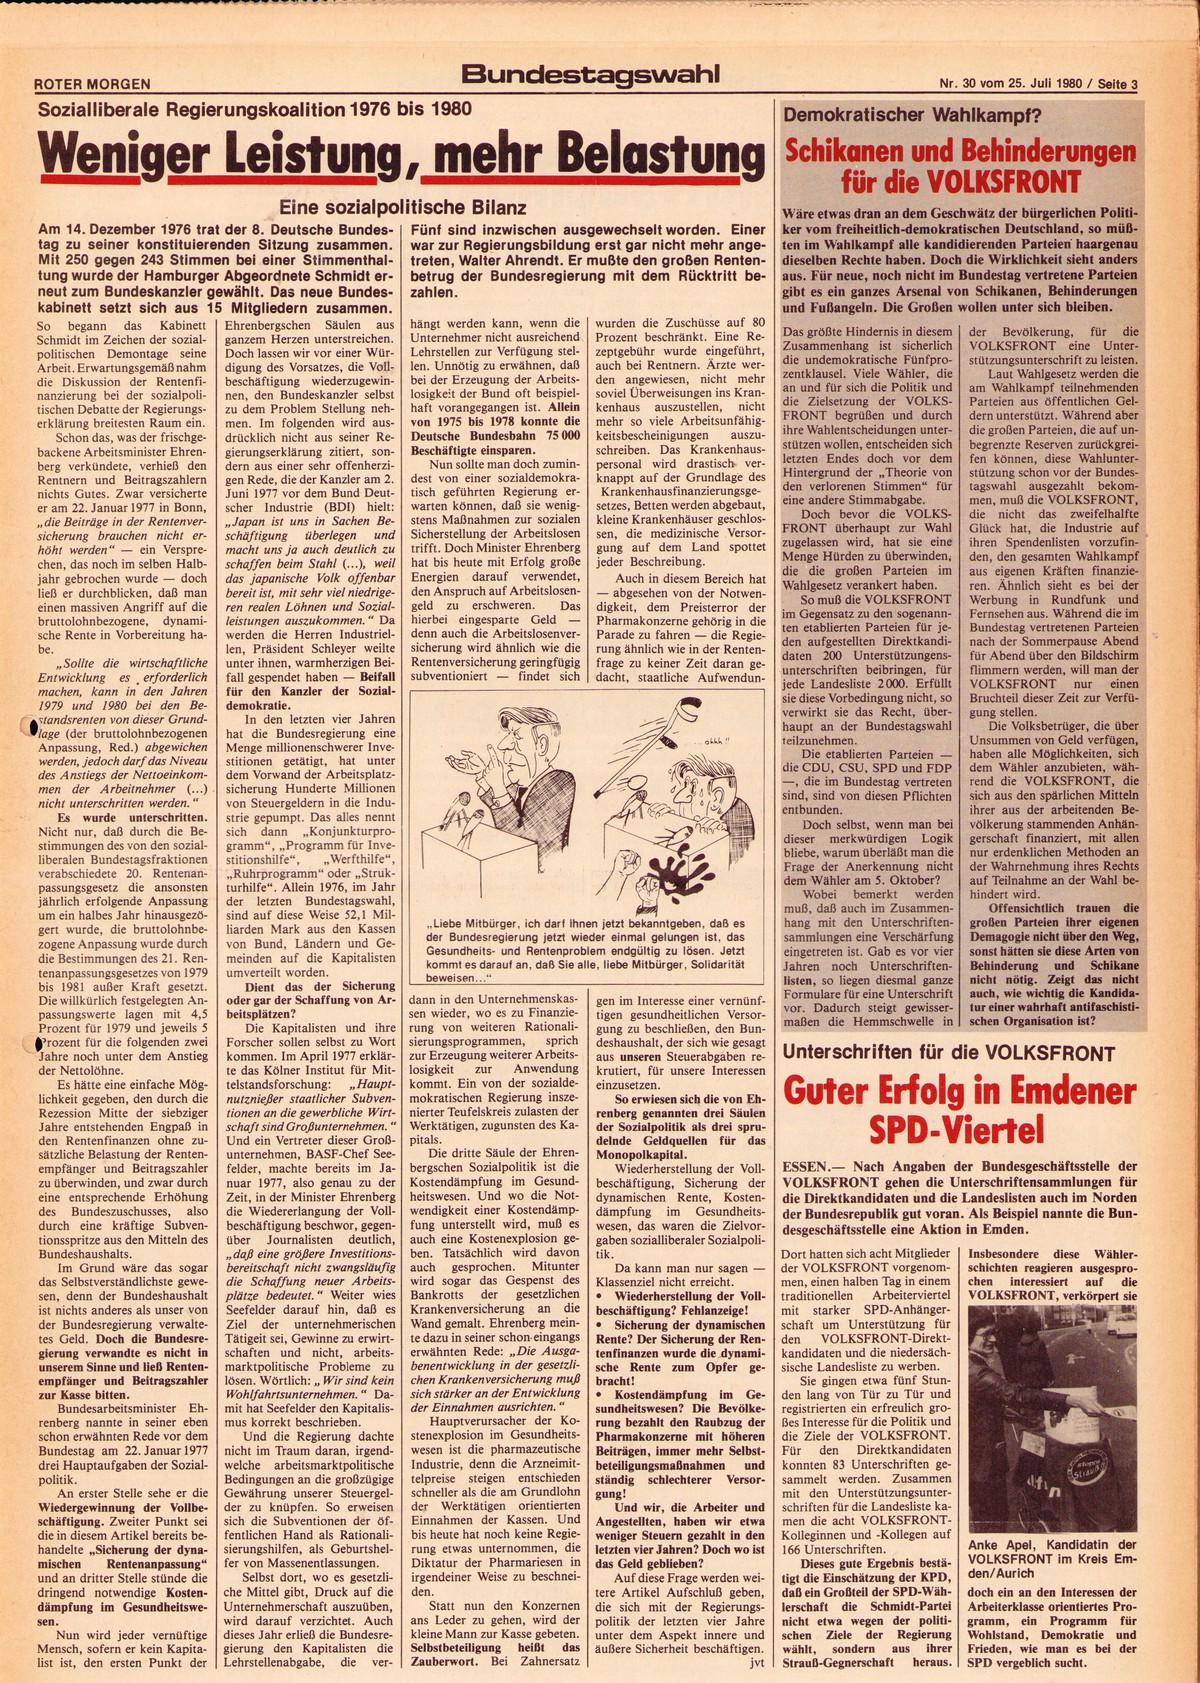 Roter Morgen, 14. Jg., 25. Juli 1980, Nr. 30, Seite 3